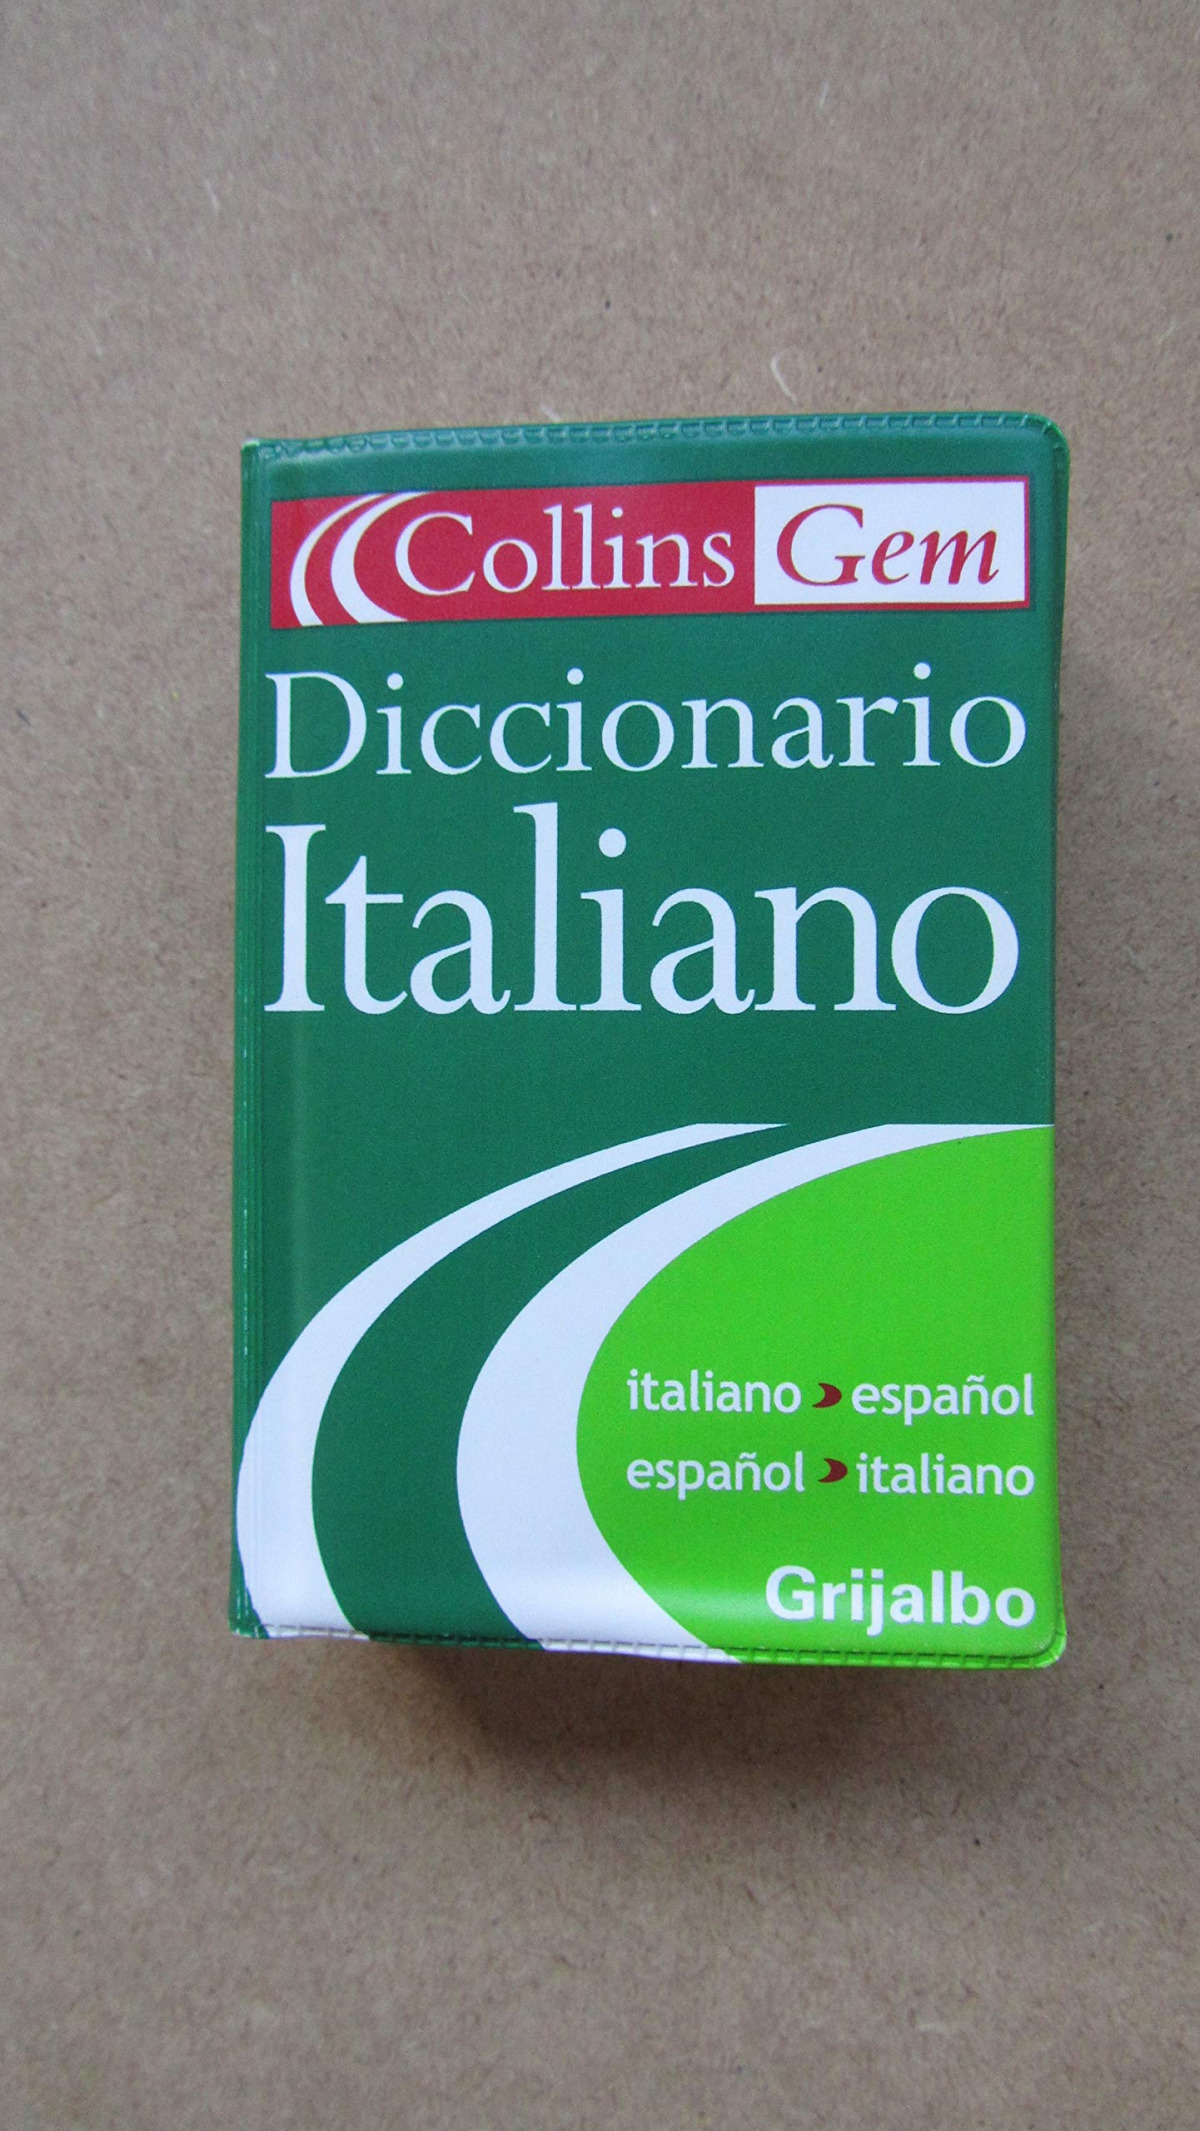 Diccionario italiano collins gem italiano-español/español-italiano - Aa.Vv.